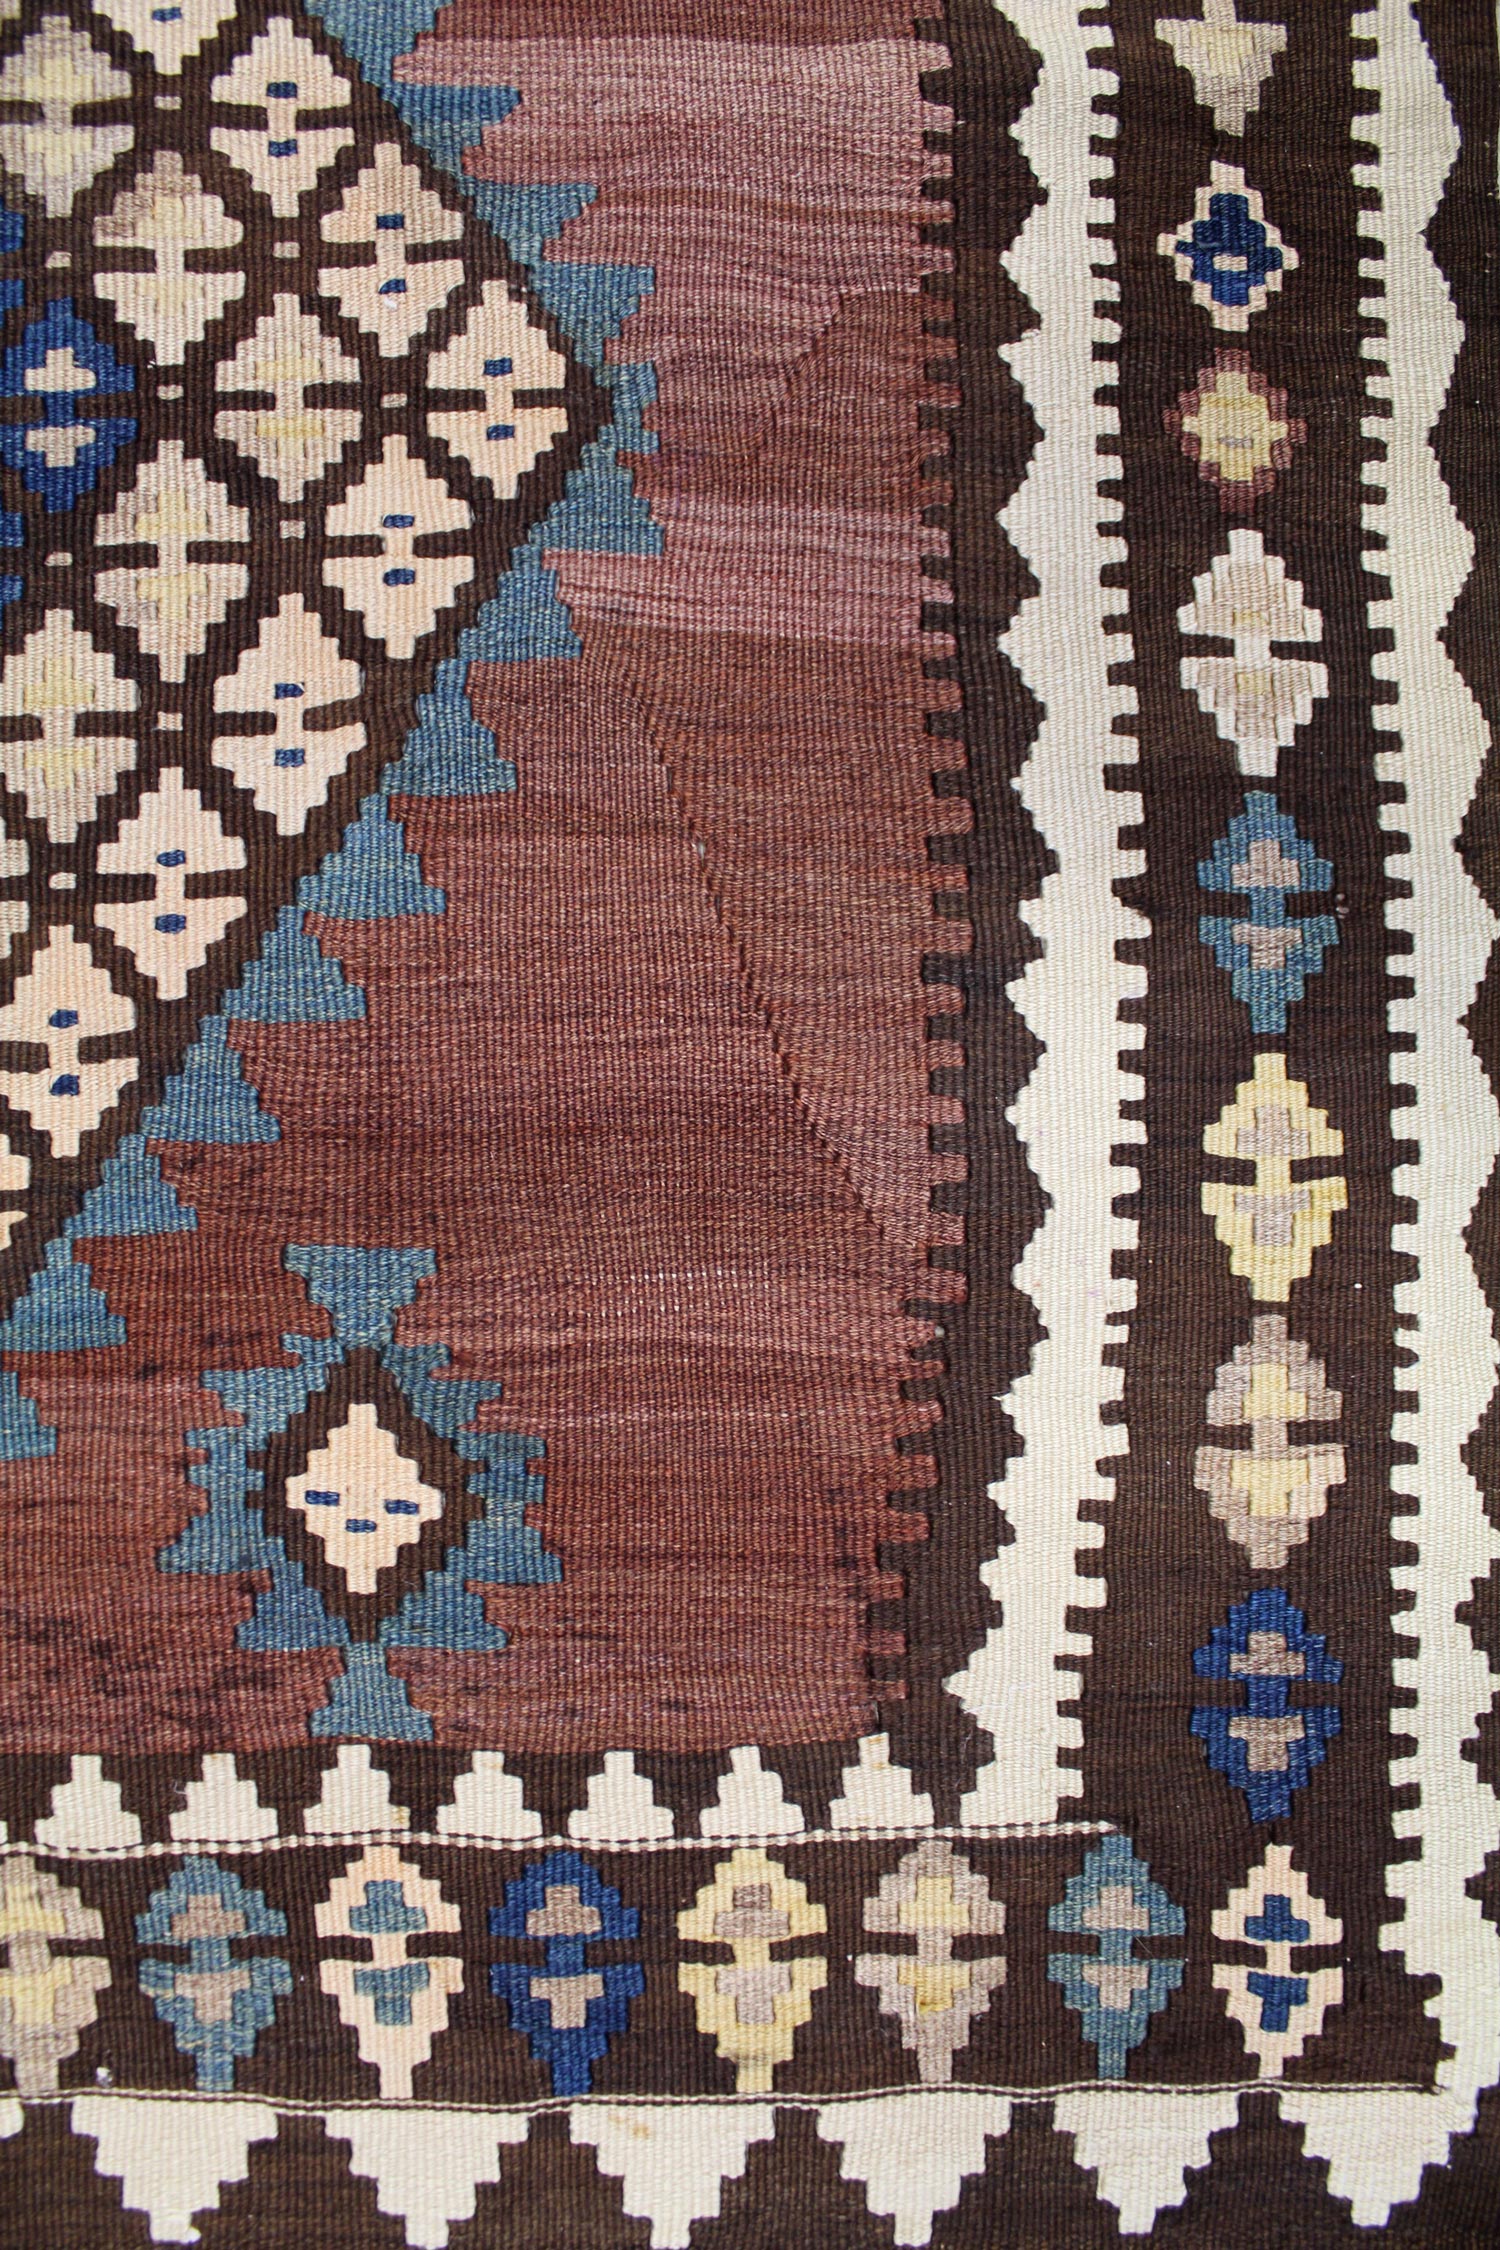 Vintage Kilim Handwoven Tribal Rug, J63339